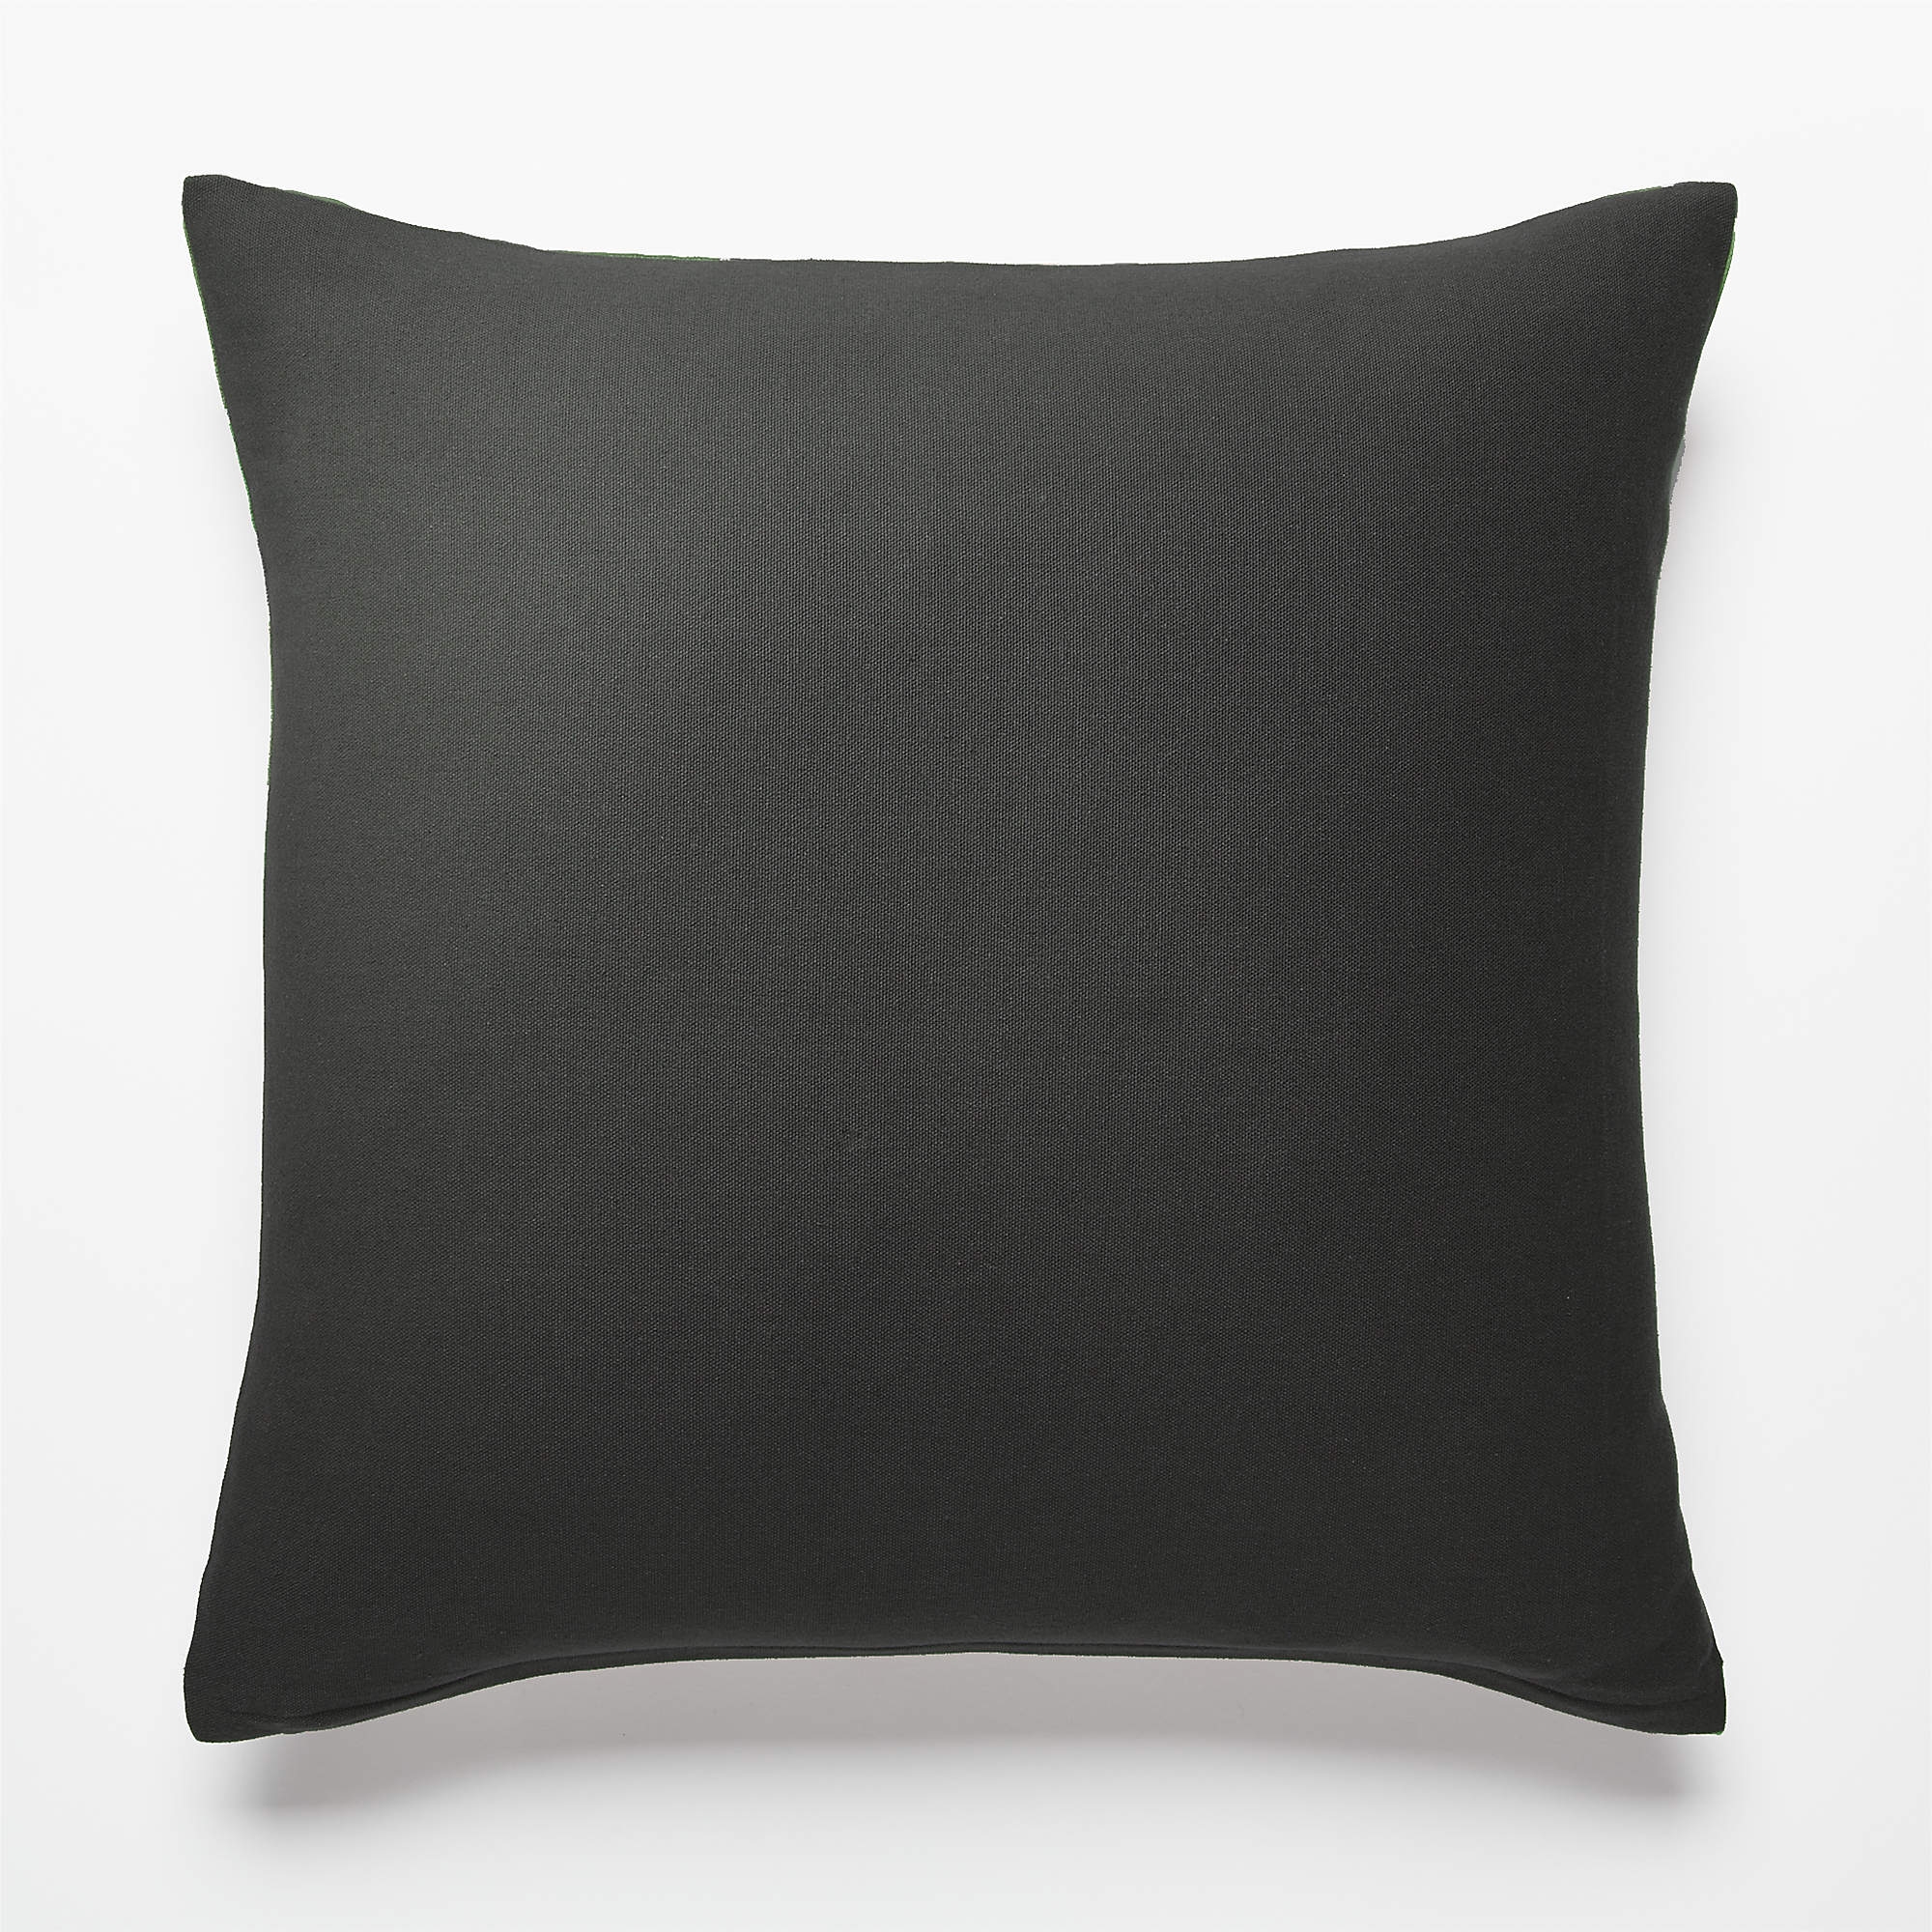 Fan Blockprint Pillow with Down-Alternative Insert, 20" x 20" - Image 2